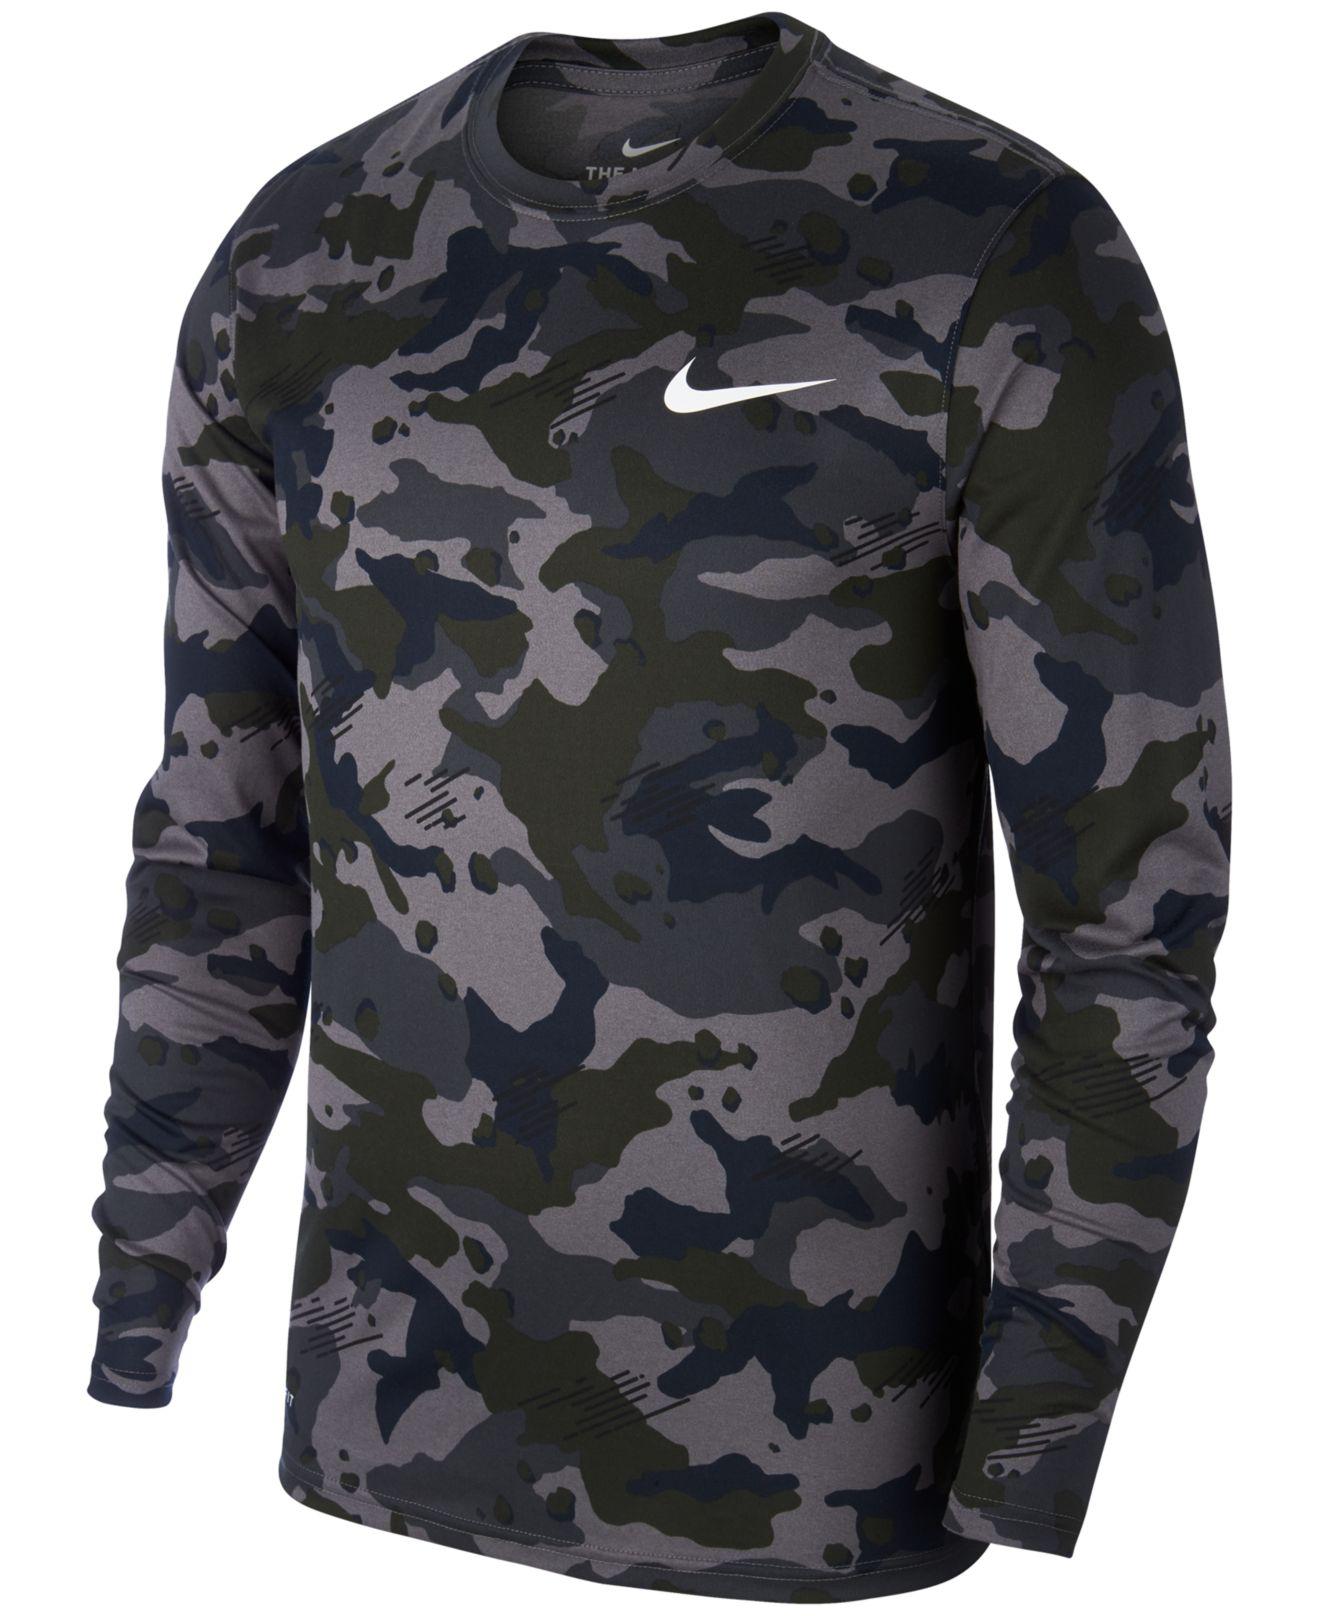 Nike Dry Camo-print Training Shirt in Grey (Gray) for Men - Lyst